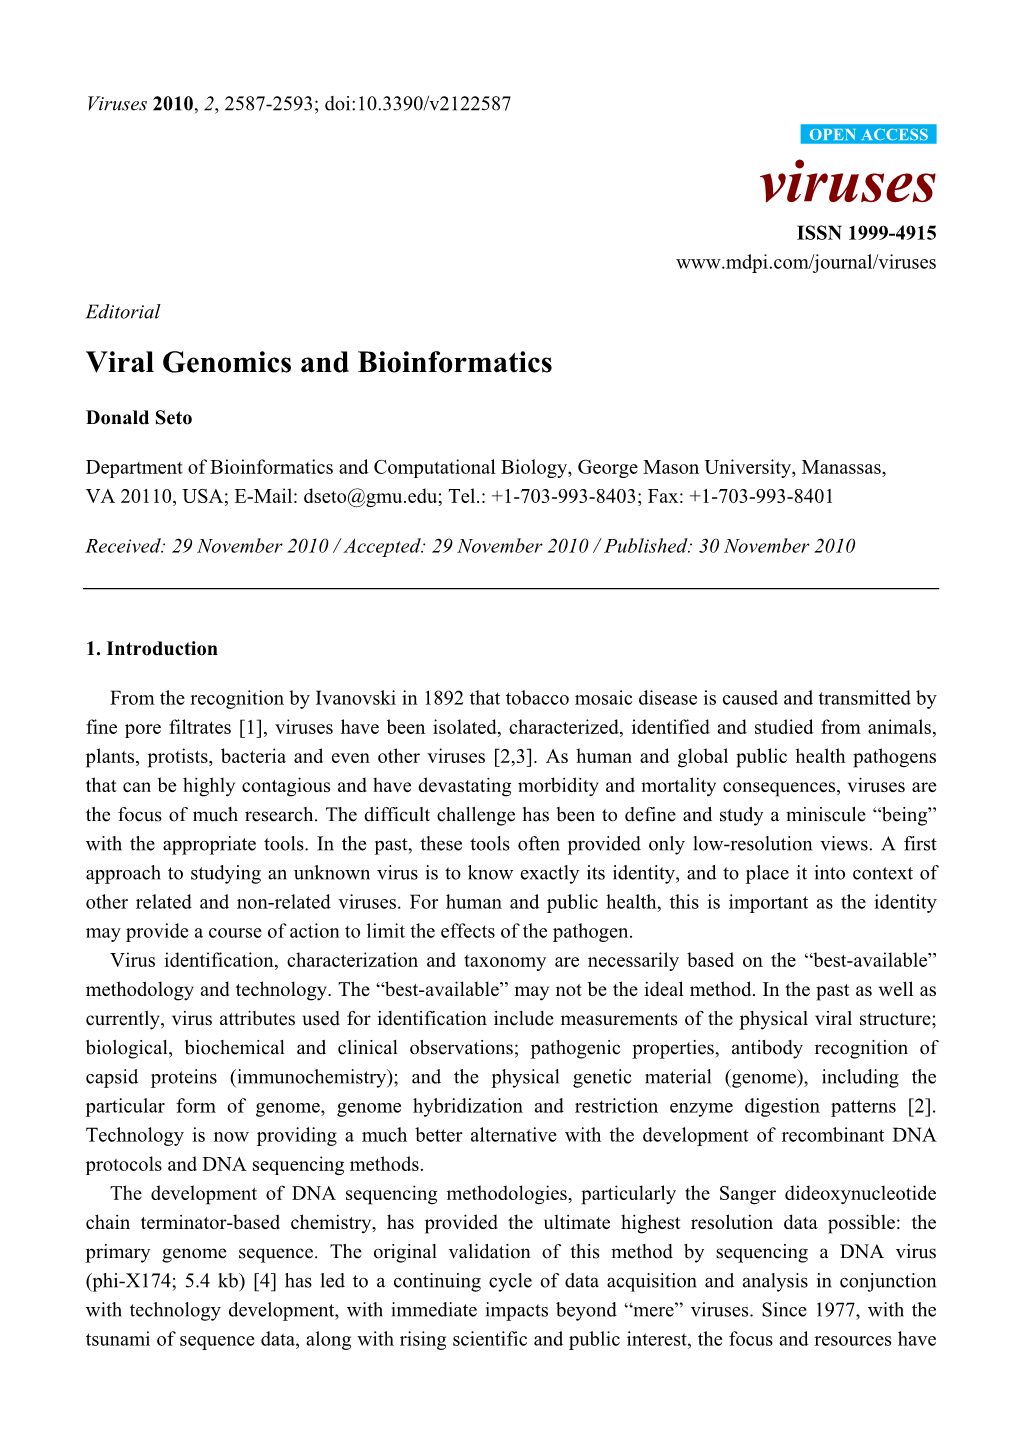 Viral Genomics and Bioinformatics